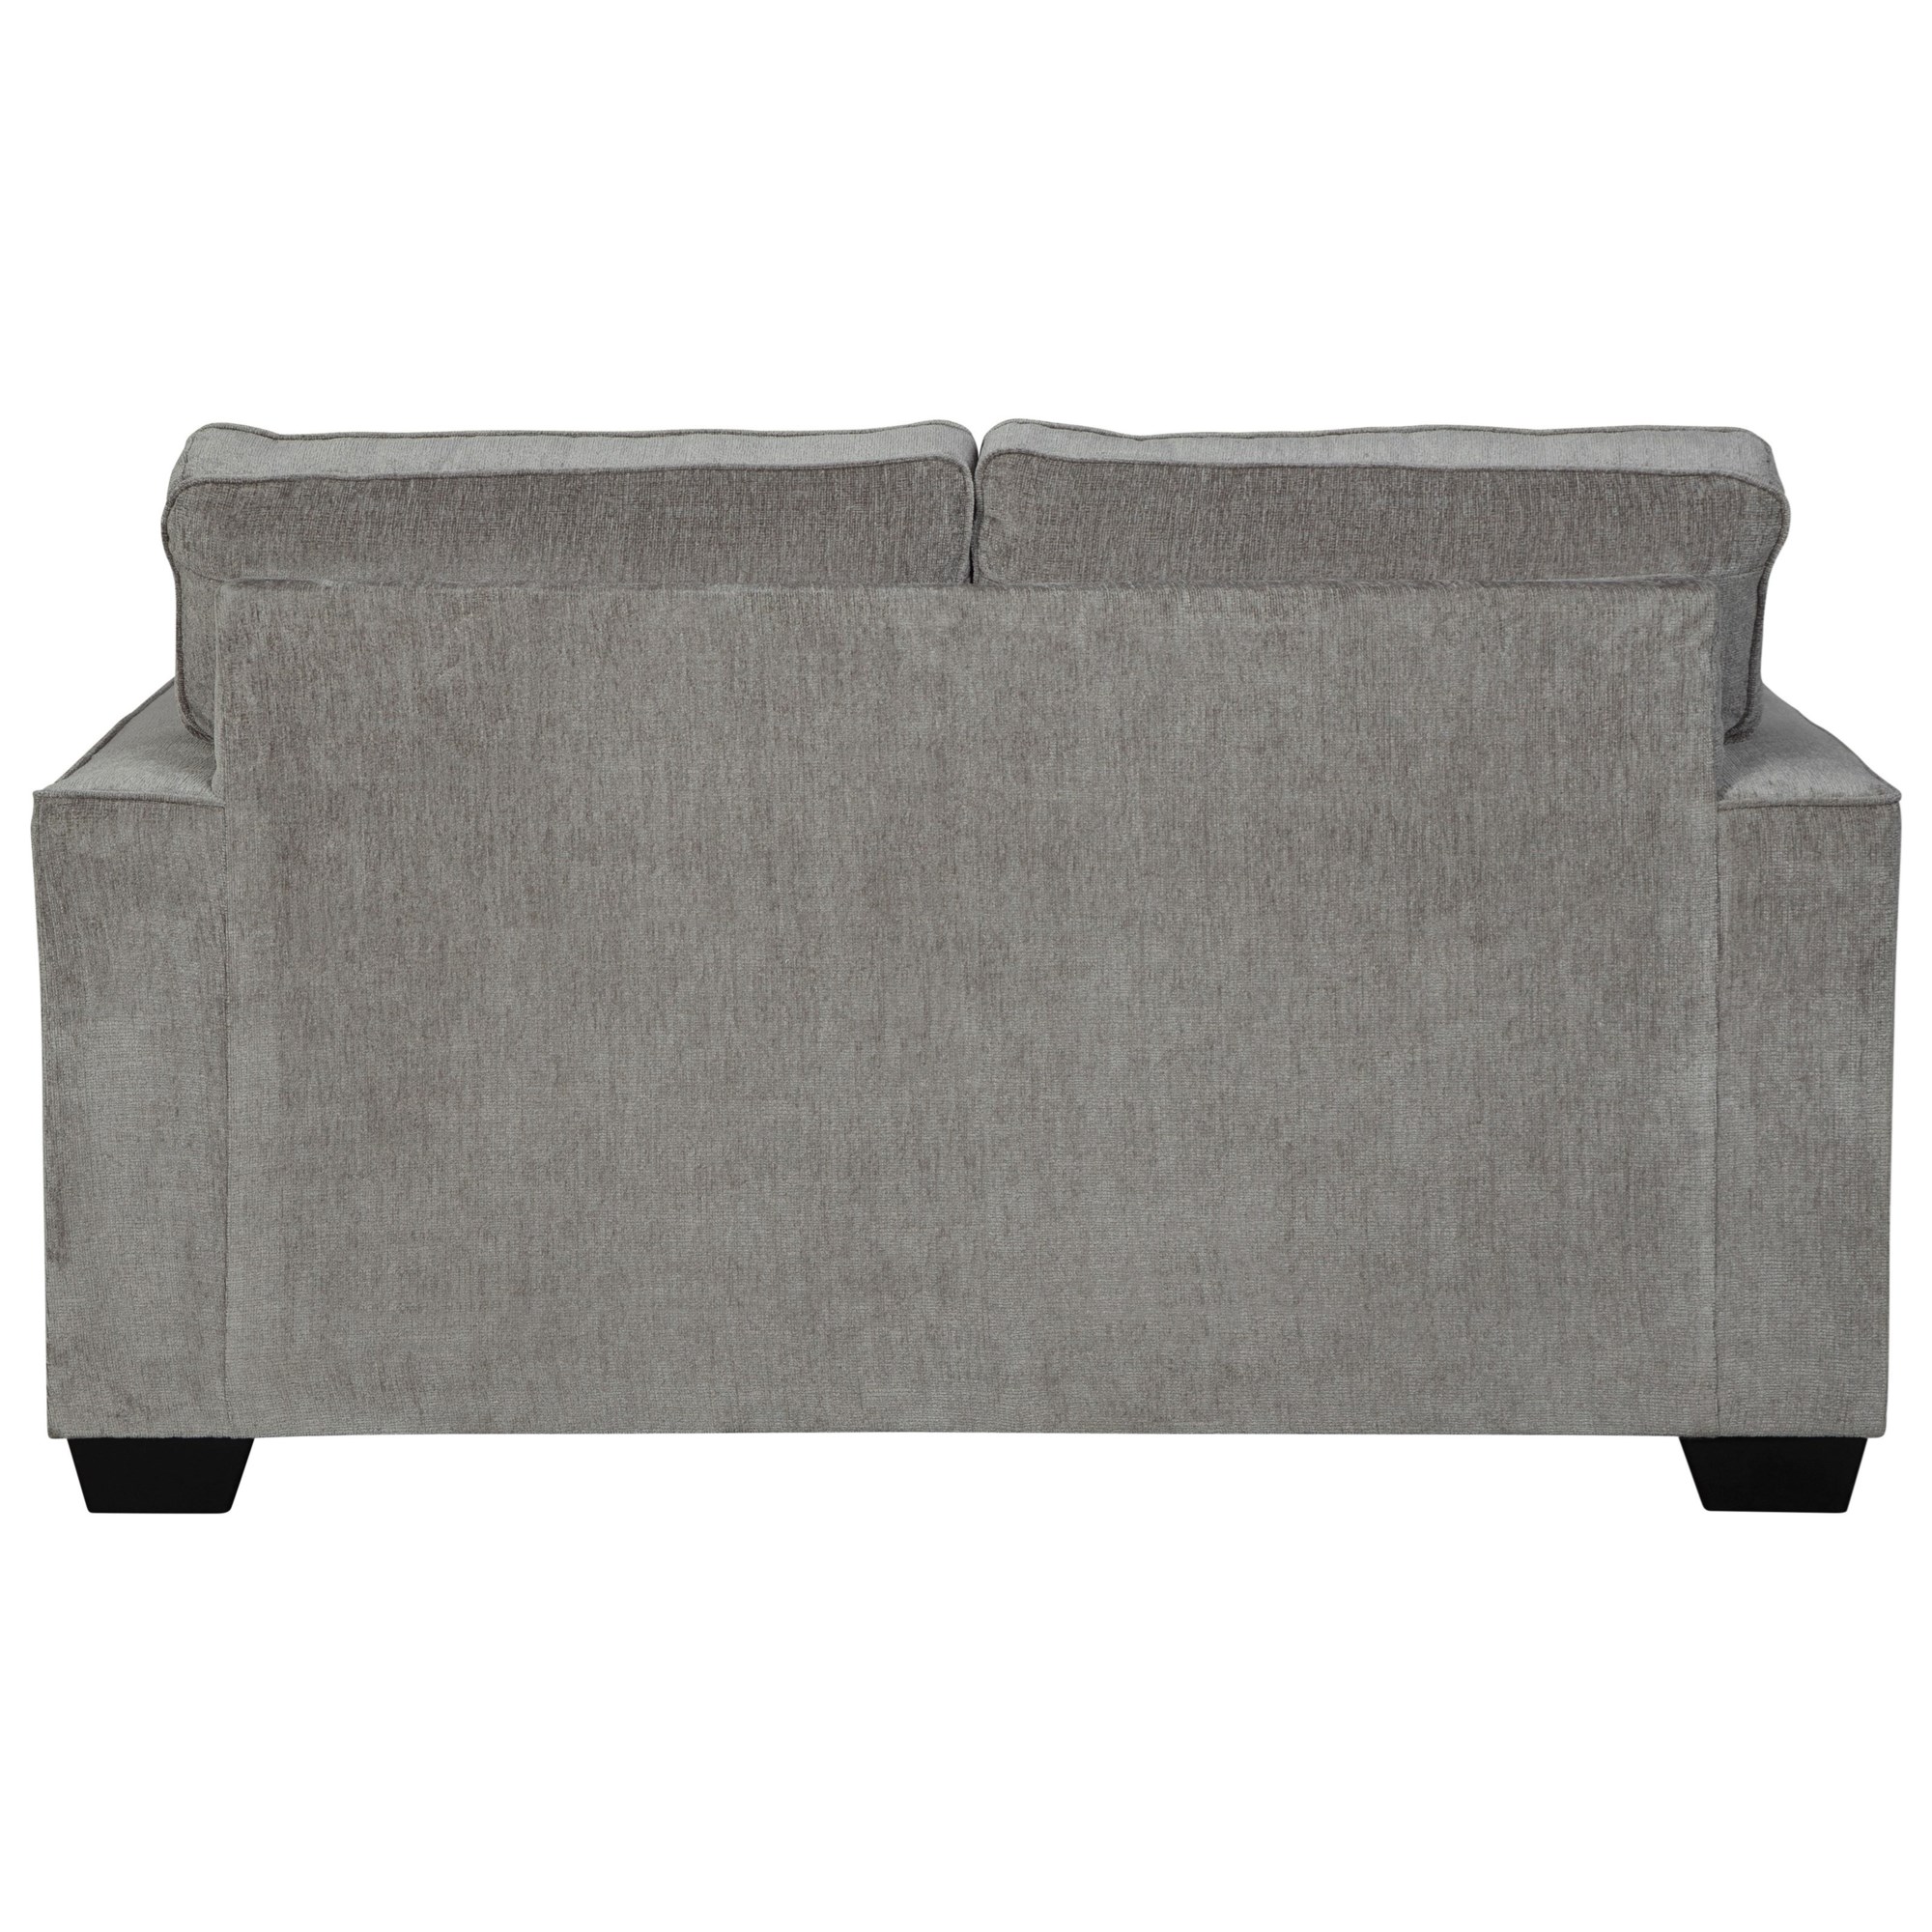 Altari Signature | HomeWorld Uph Design Furniture Loveseat | Ashley - 8721435 by Loveseats